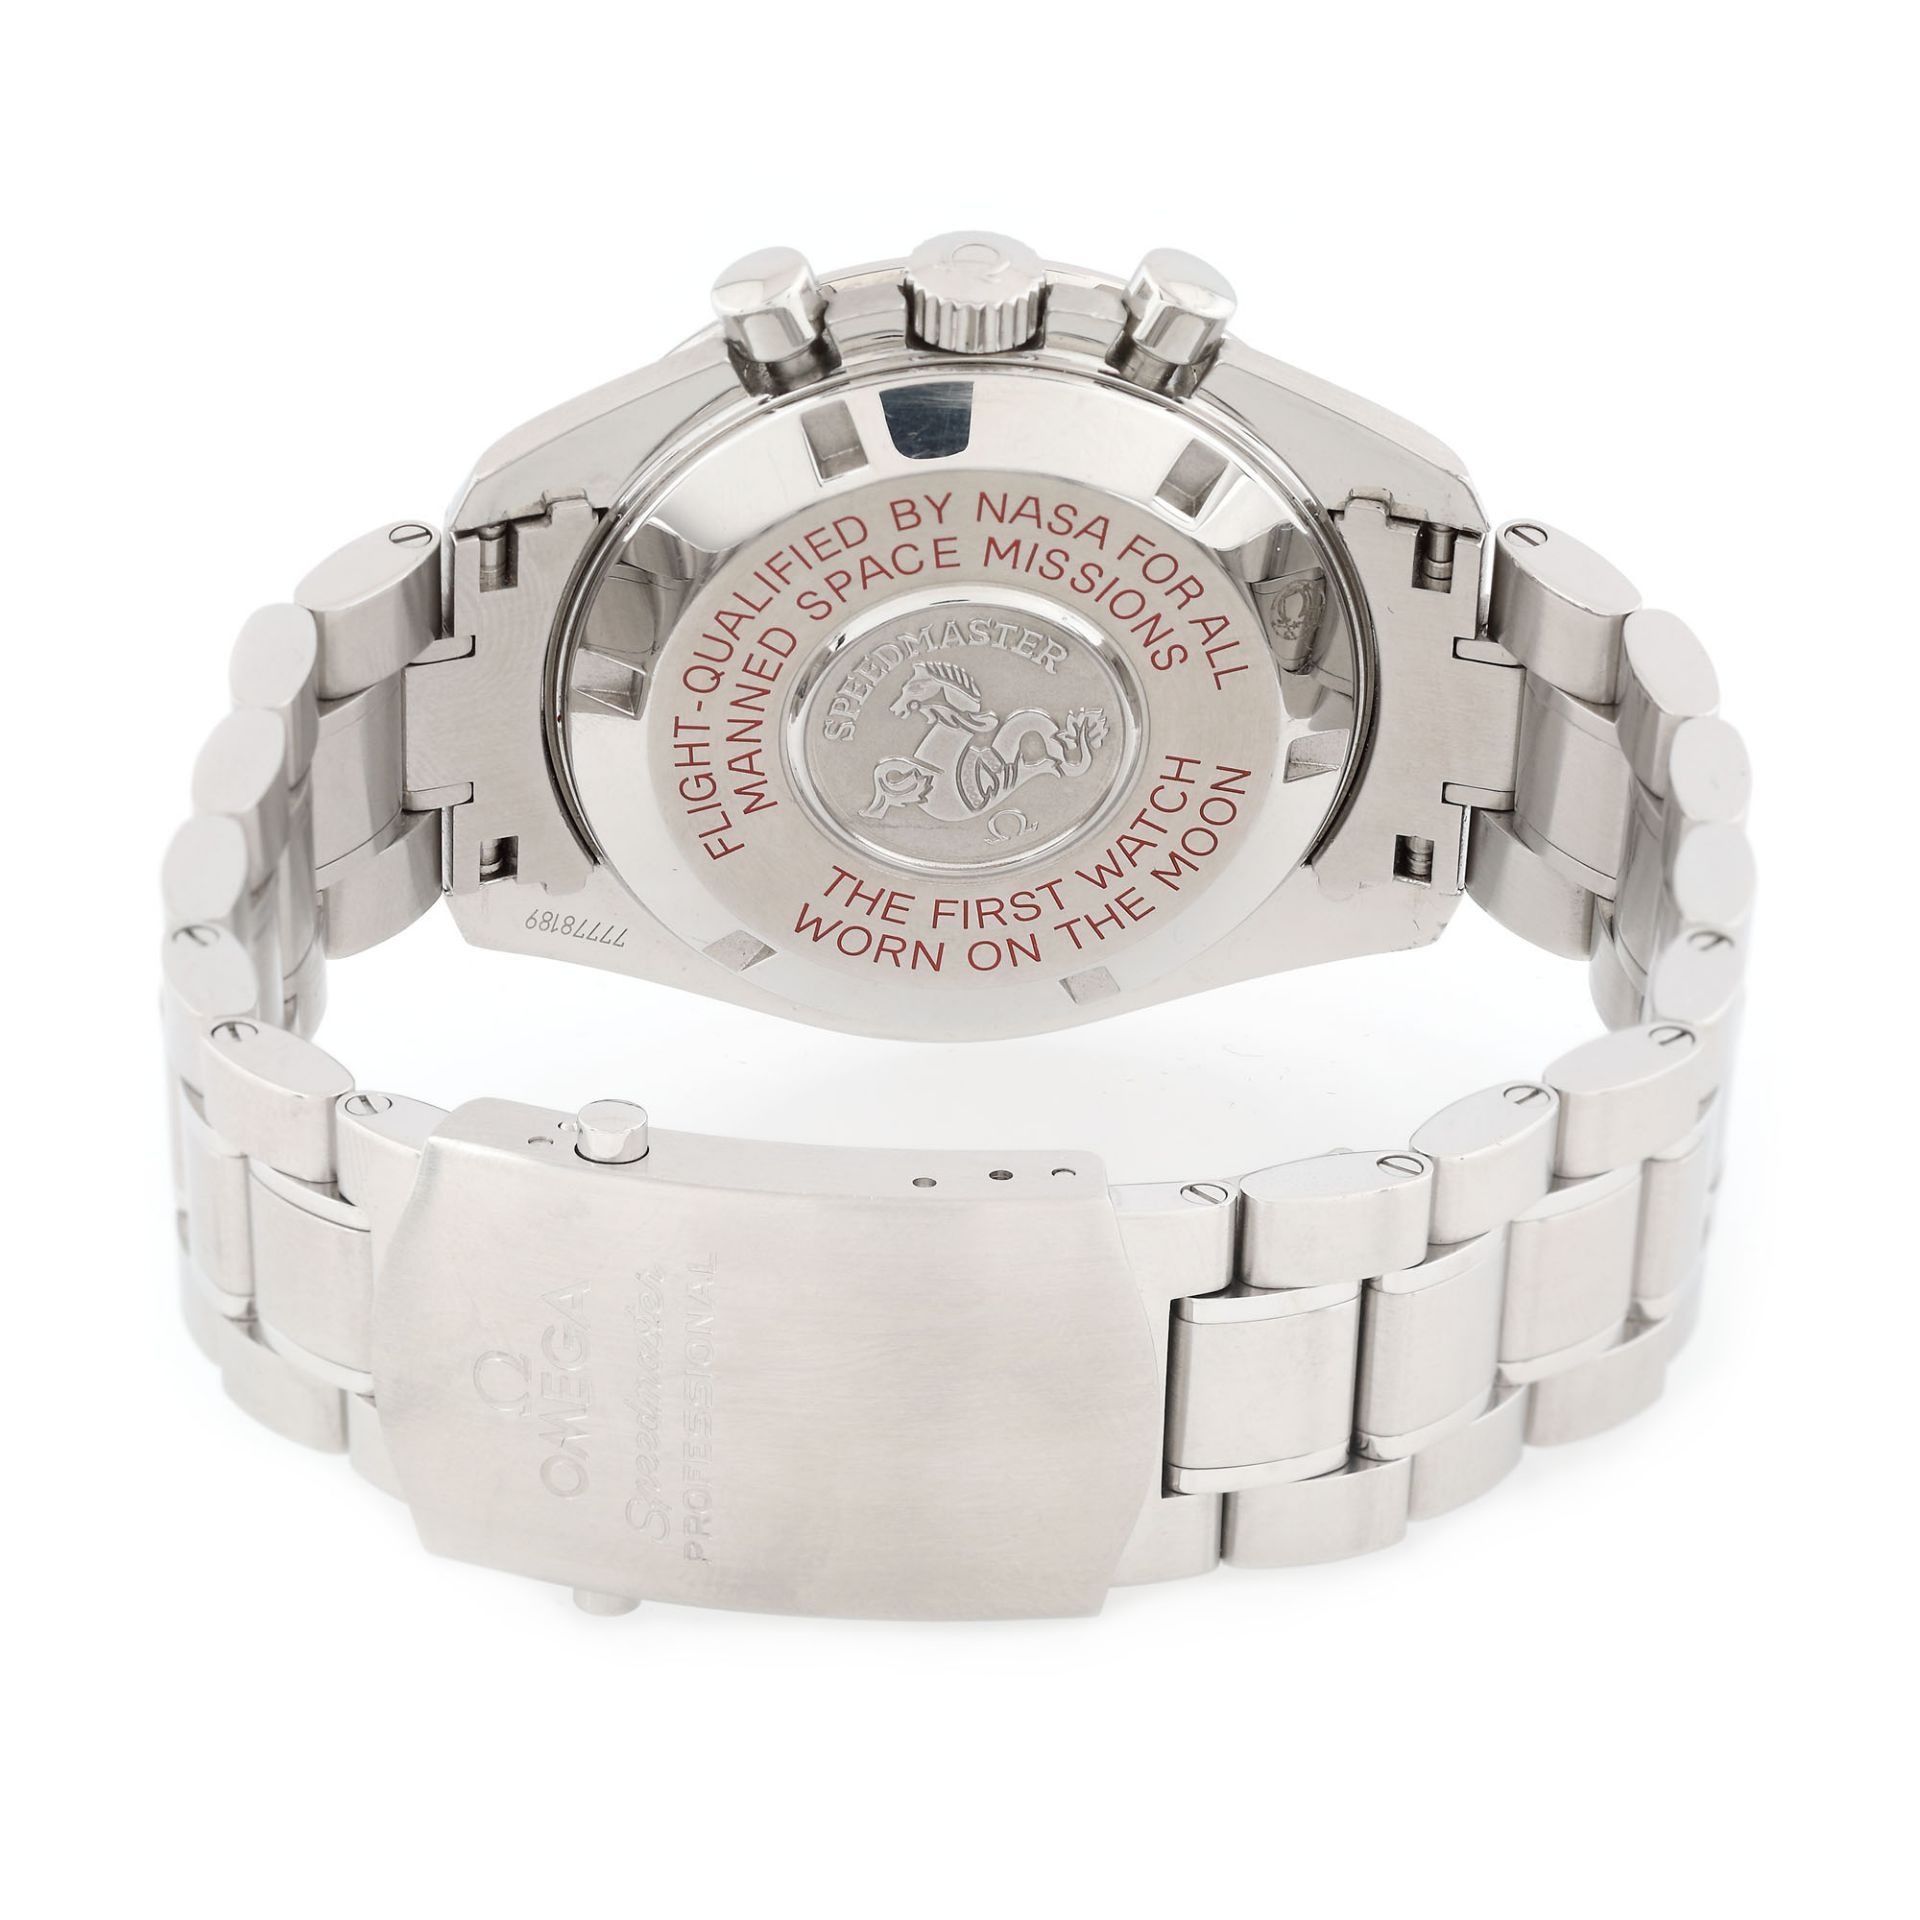 Omega Speedmaster Professional Moonwatch "TinTin" wristwatch, men, original box, collector's item - Image 3 of 4